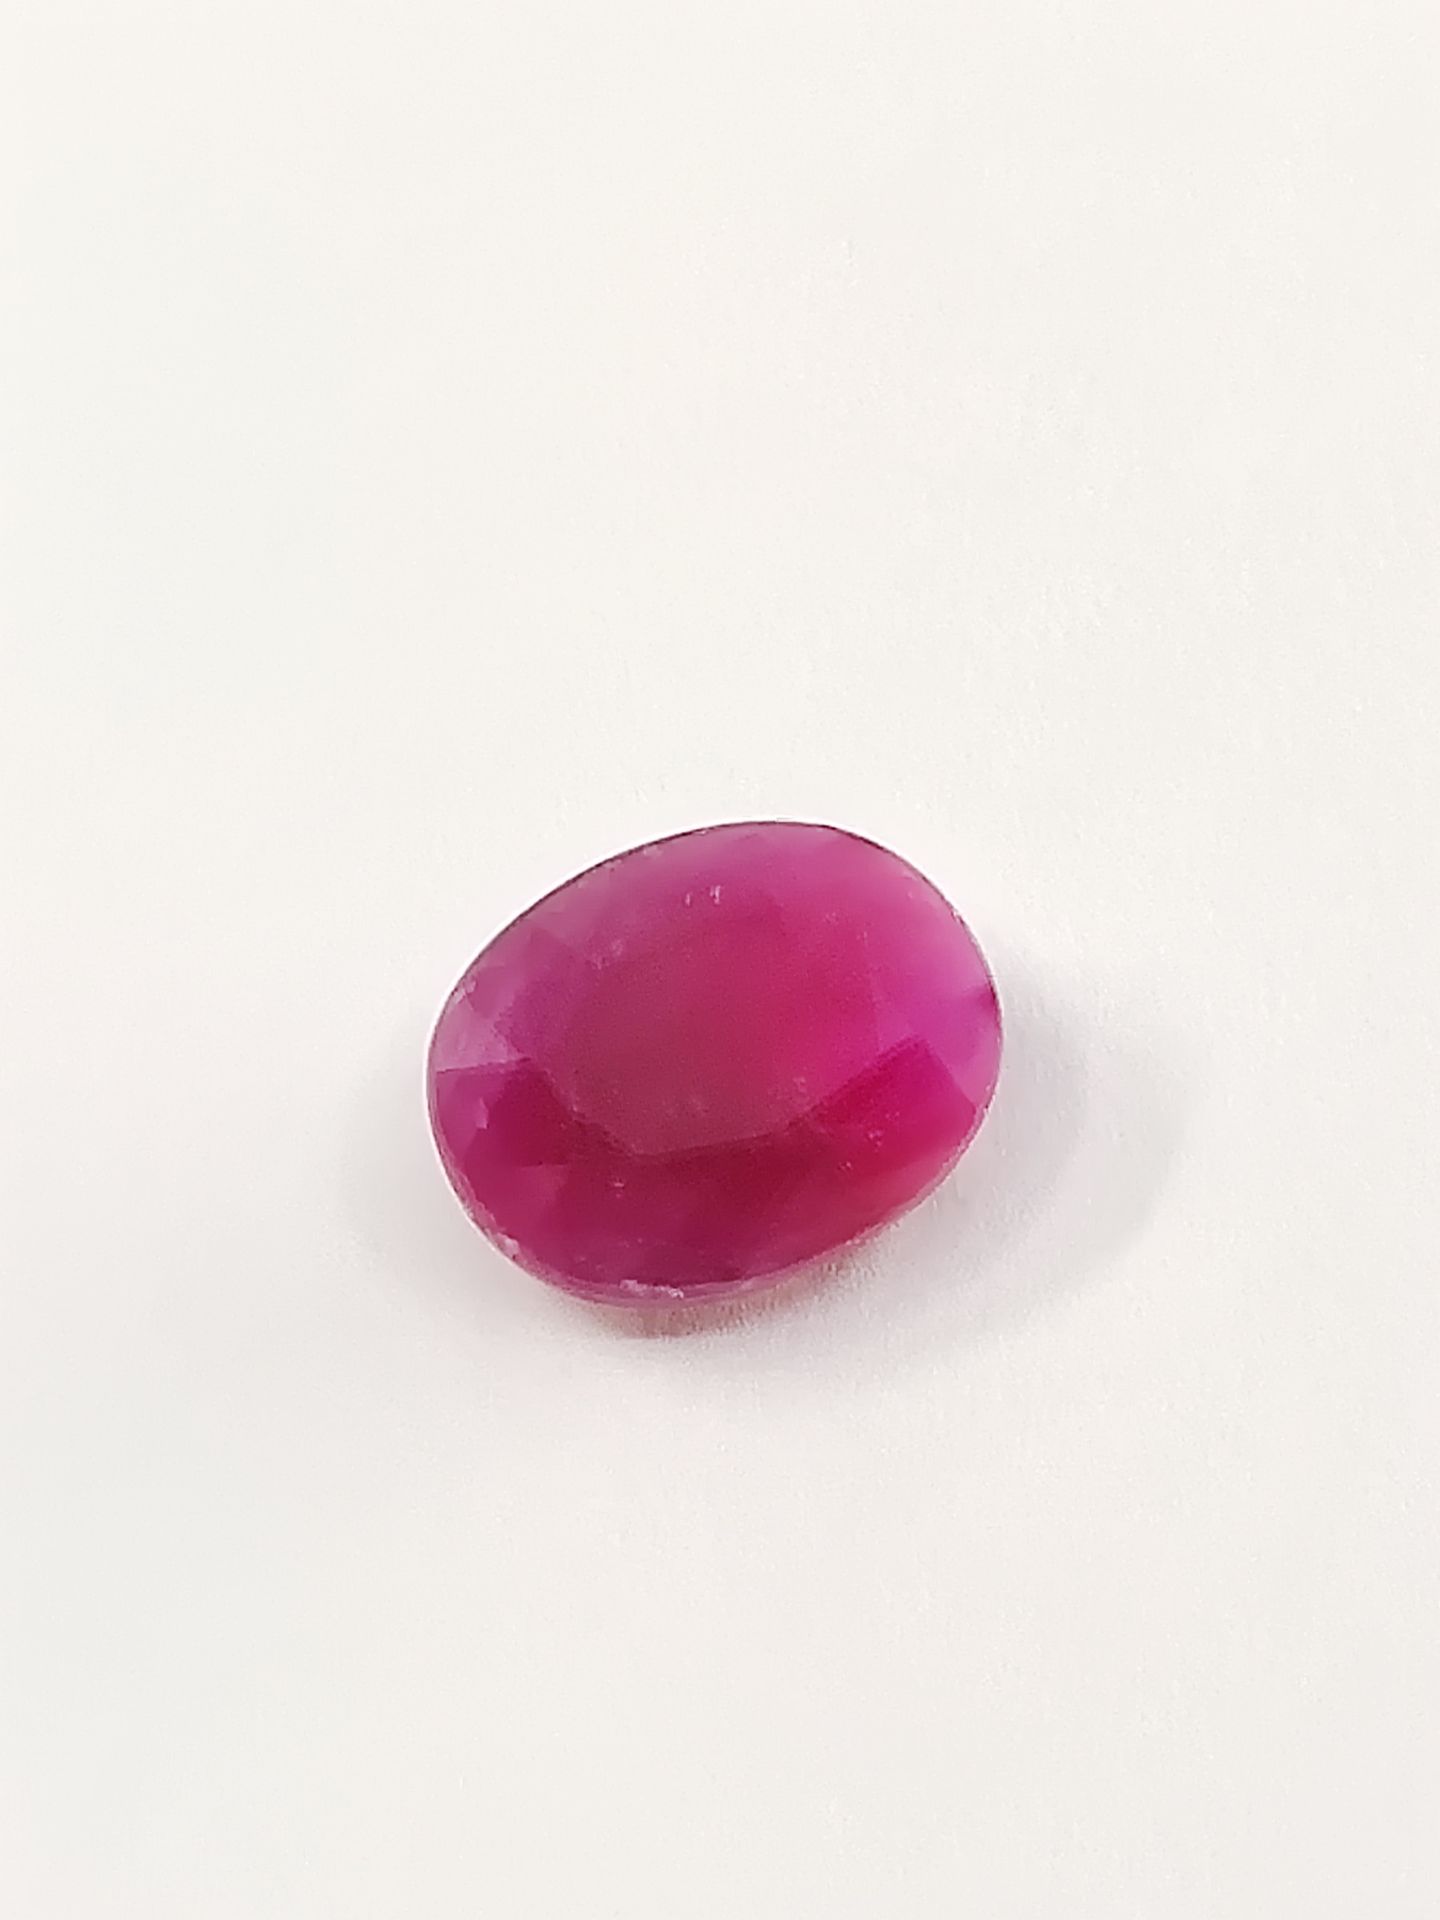 Null RUBIS rouge ovale, 	Madagascar, 6.94 carats


Dim :	12,5 x 10